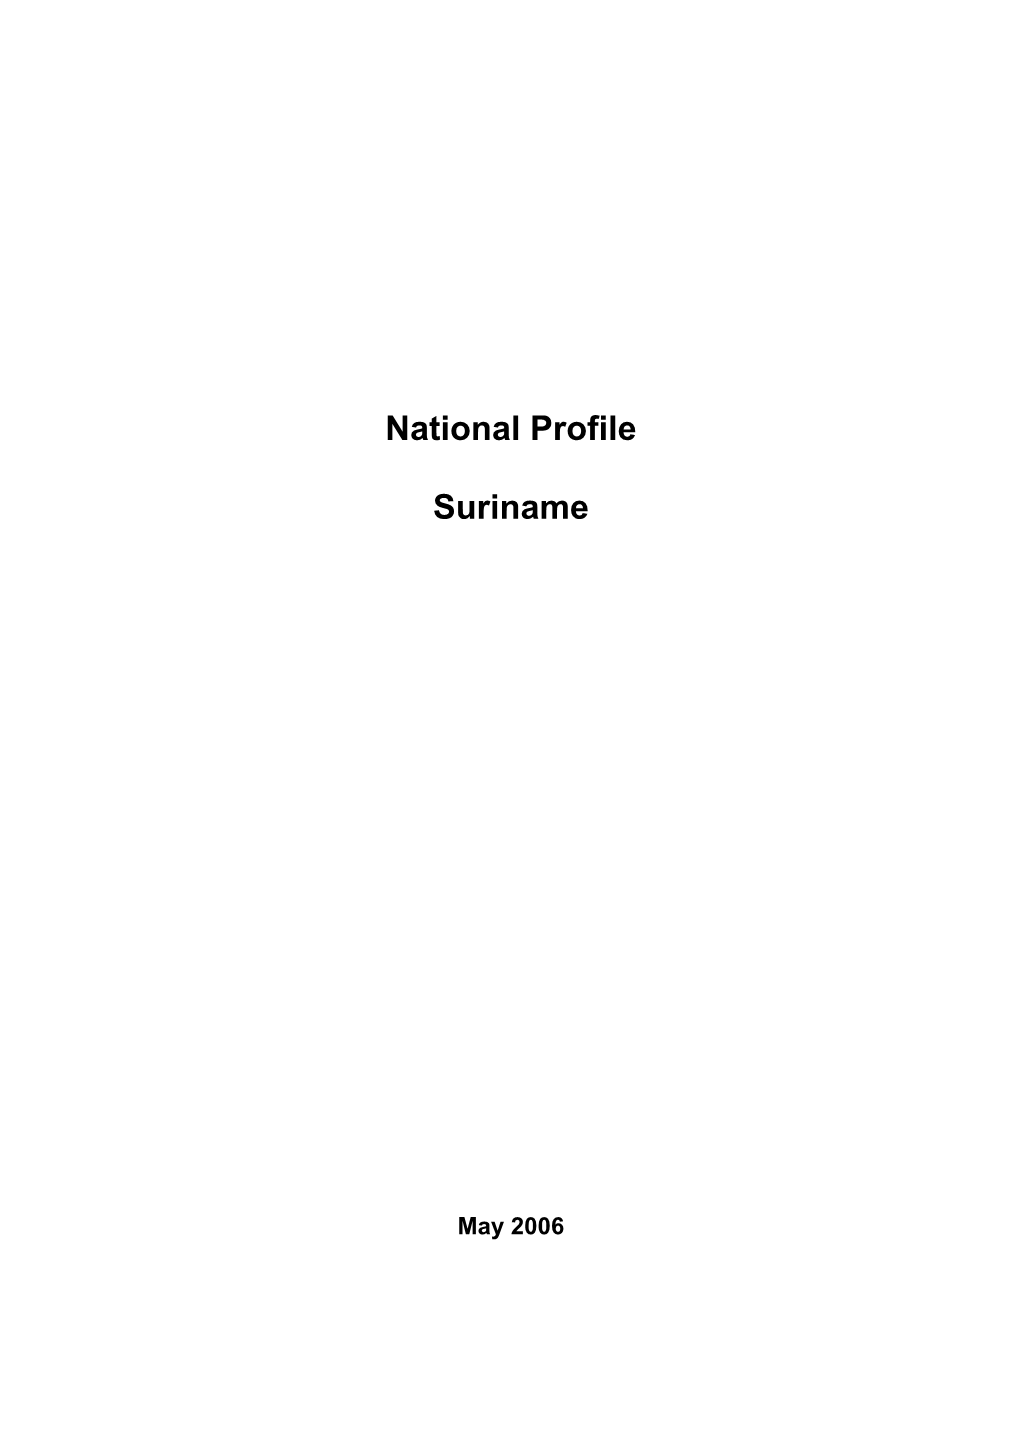 National Profile Suriname